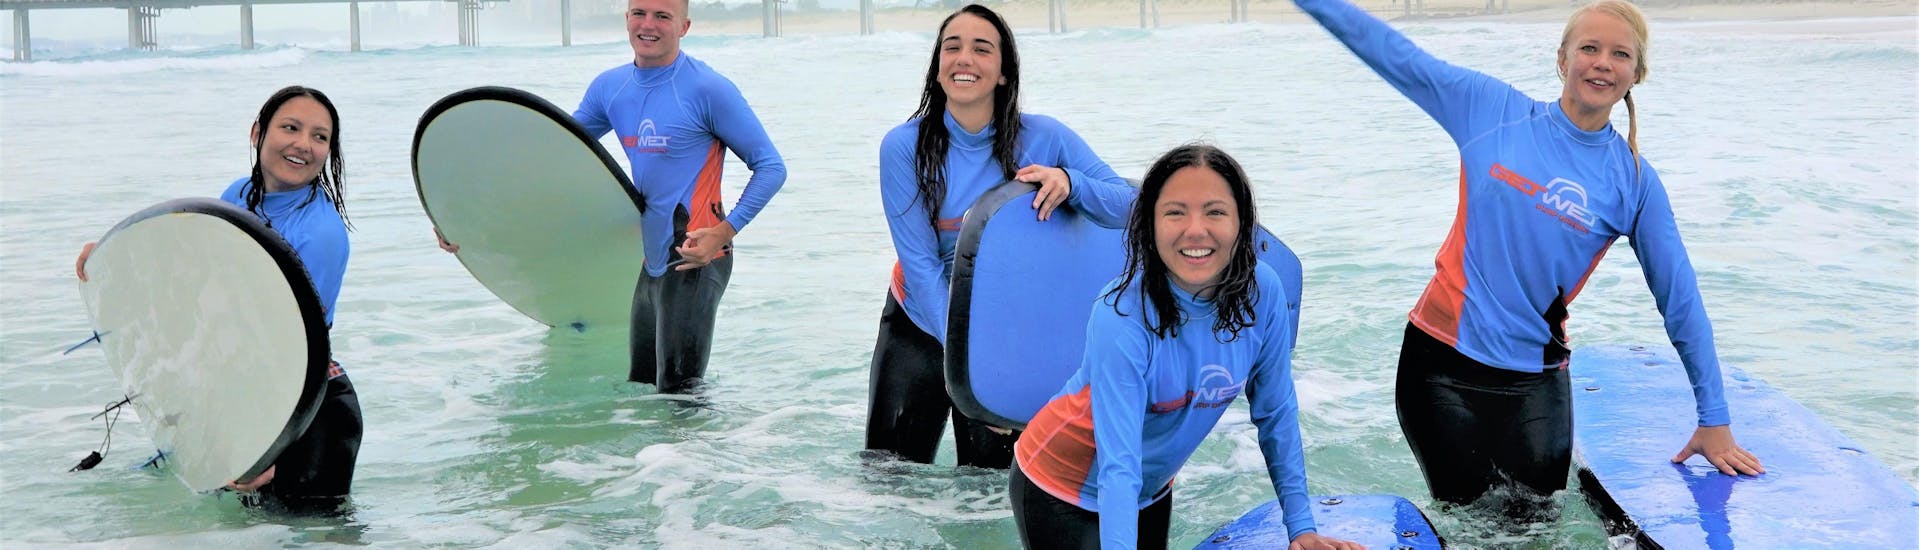 Clases de surf en Gold Coast para adultos - Principiantes.